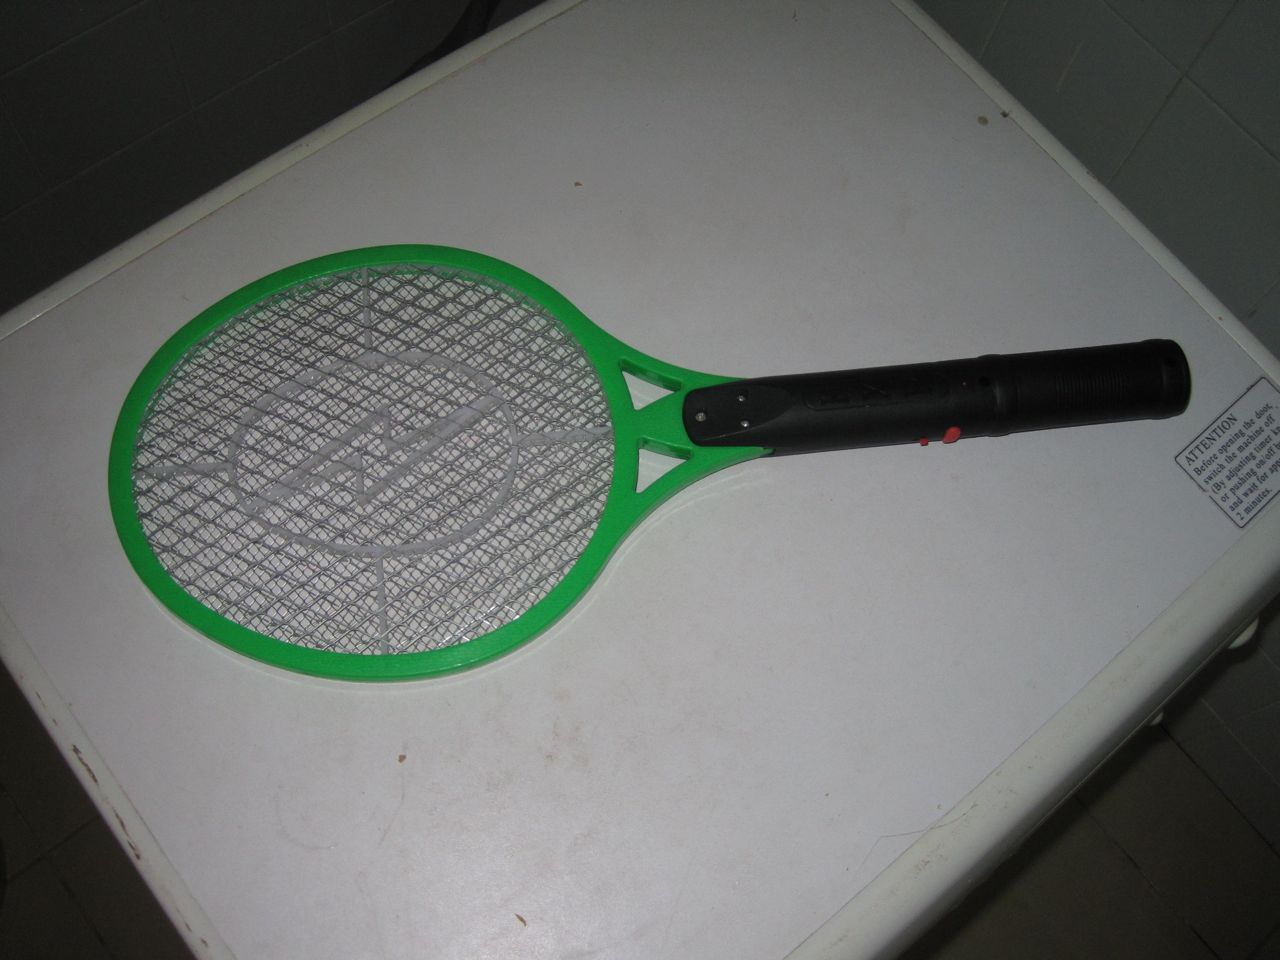 New Tennis racket?  Not so much